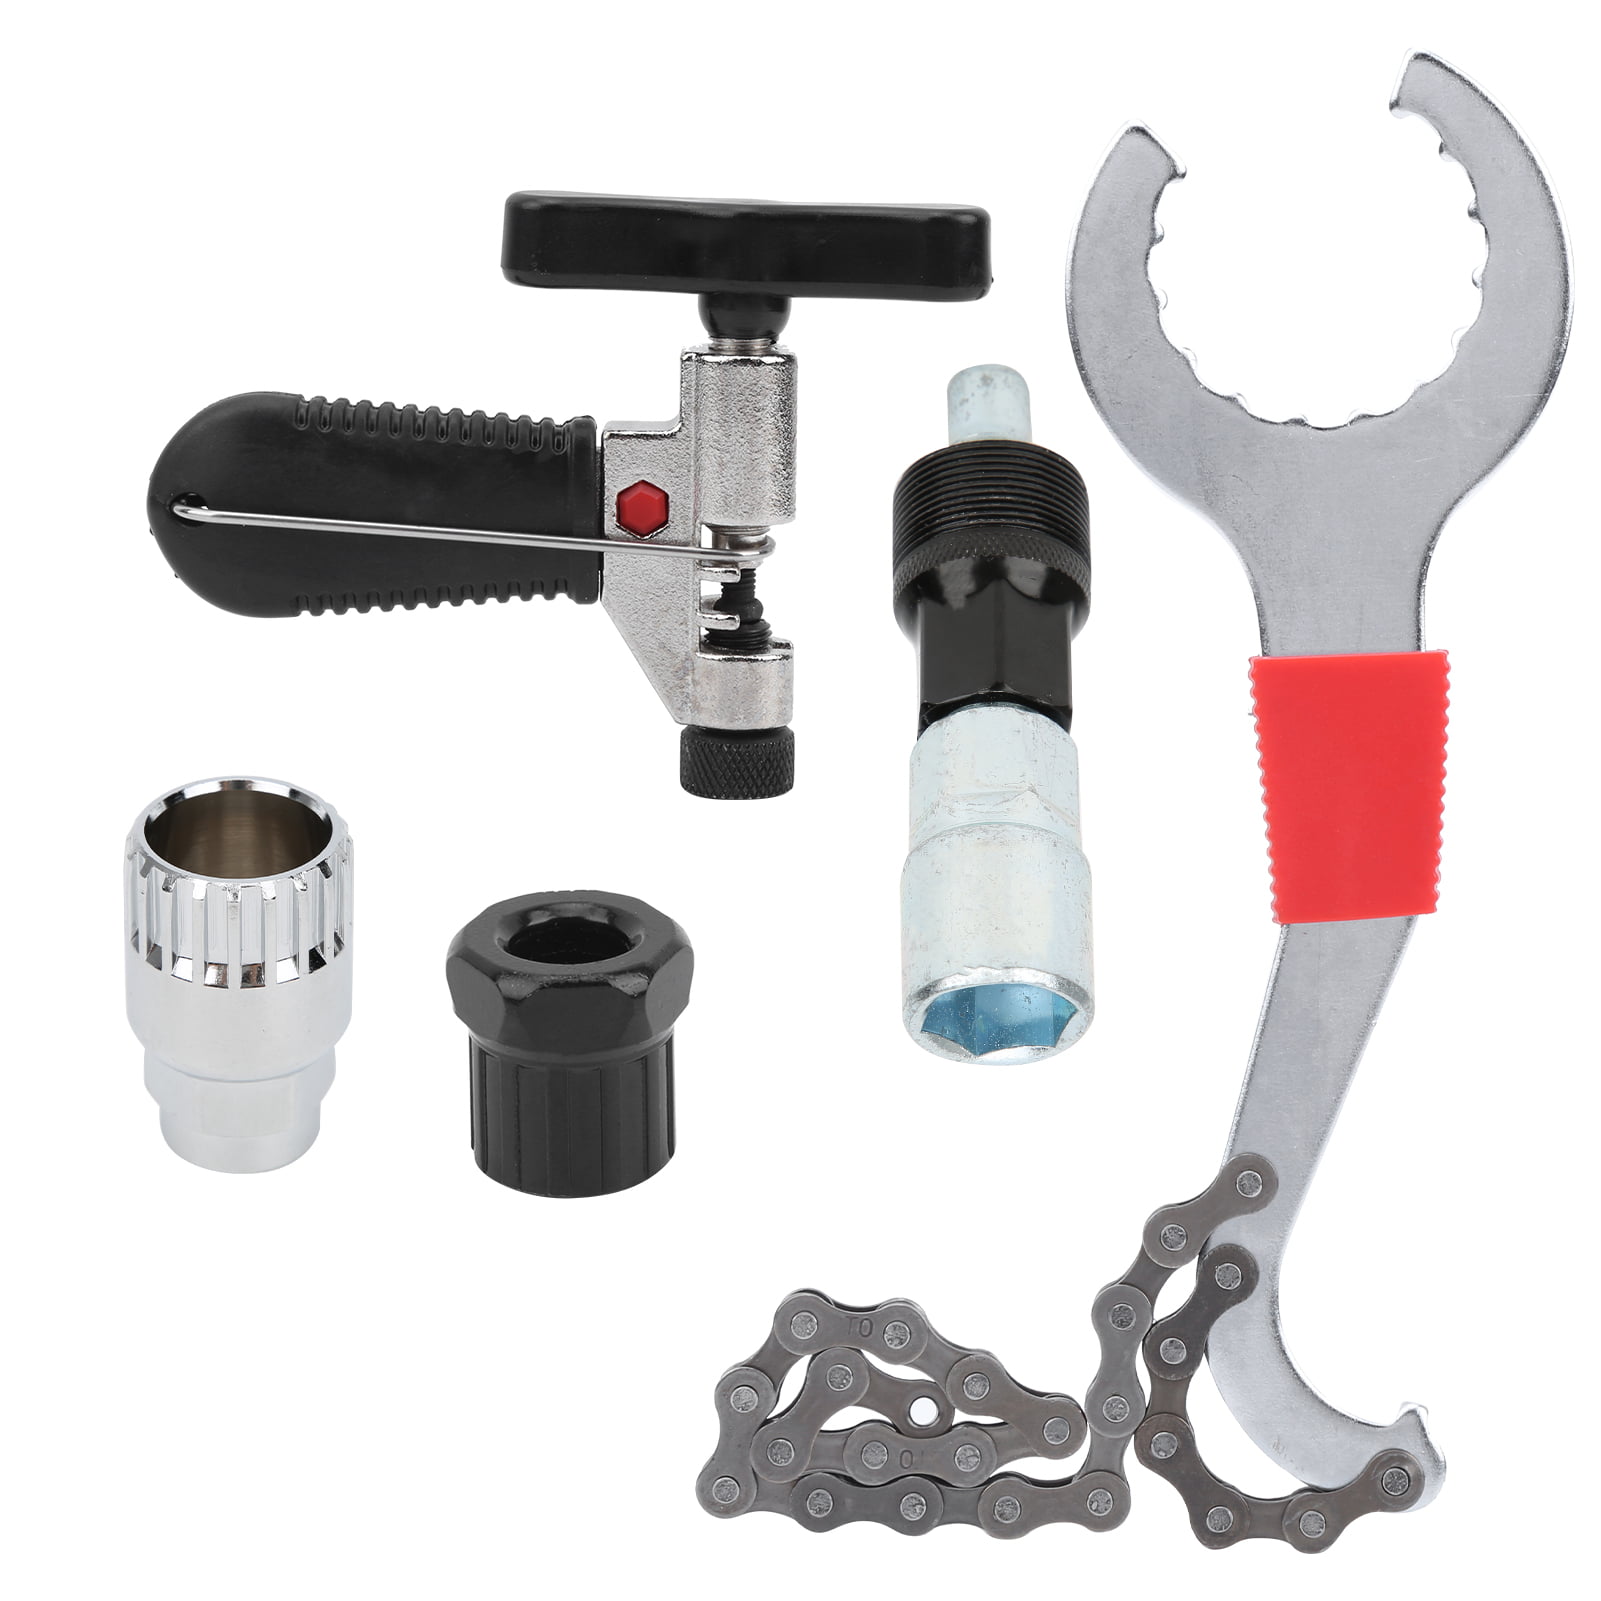 5PCS Bicycle Repair Tool Kits,Chain Cutter Bracket Flywheel Remover Crank Puller 